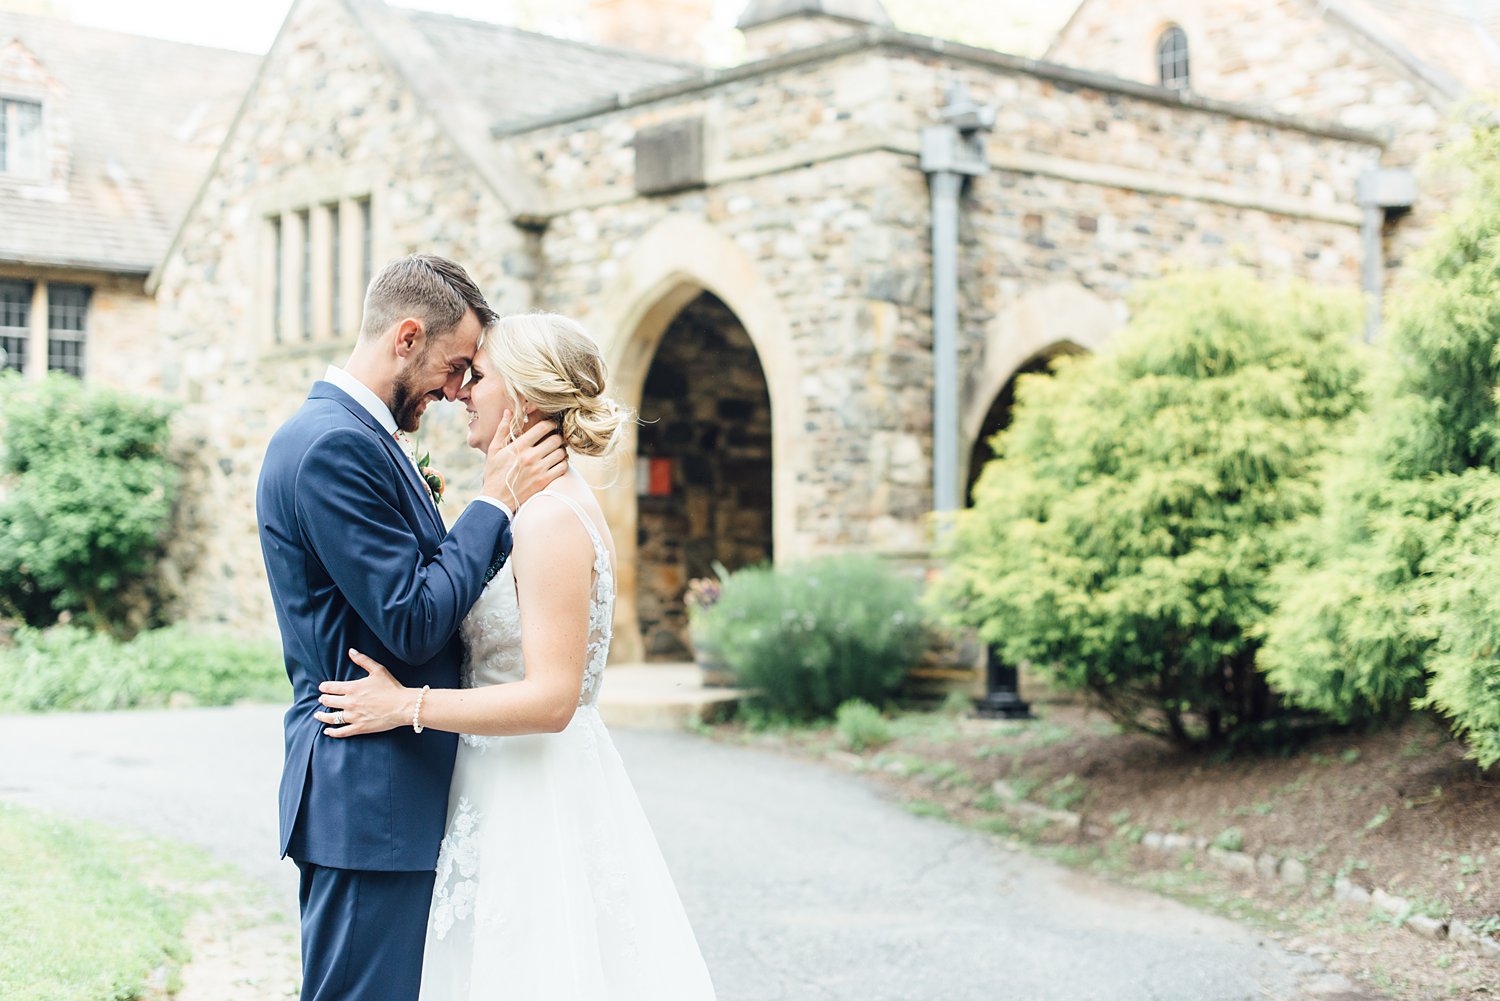 Kaitlyn + Tyler - Hunting Hill Mansion Wedding - Ridley Creek Wedding Photographer - Alison Dunn Photography photo